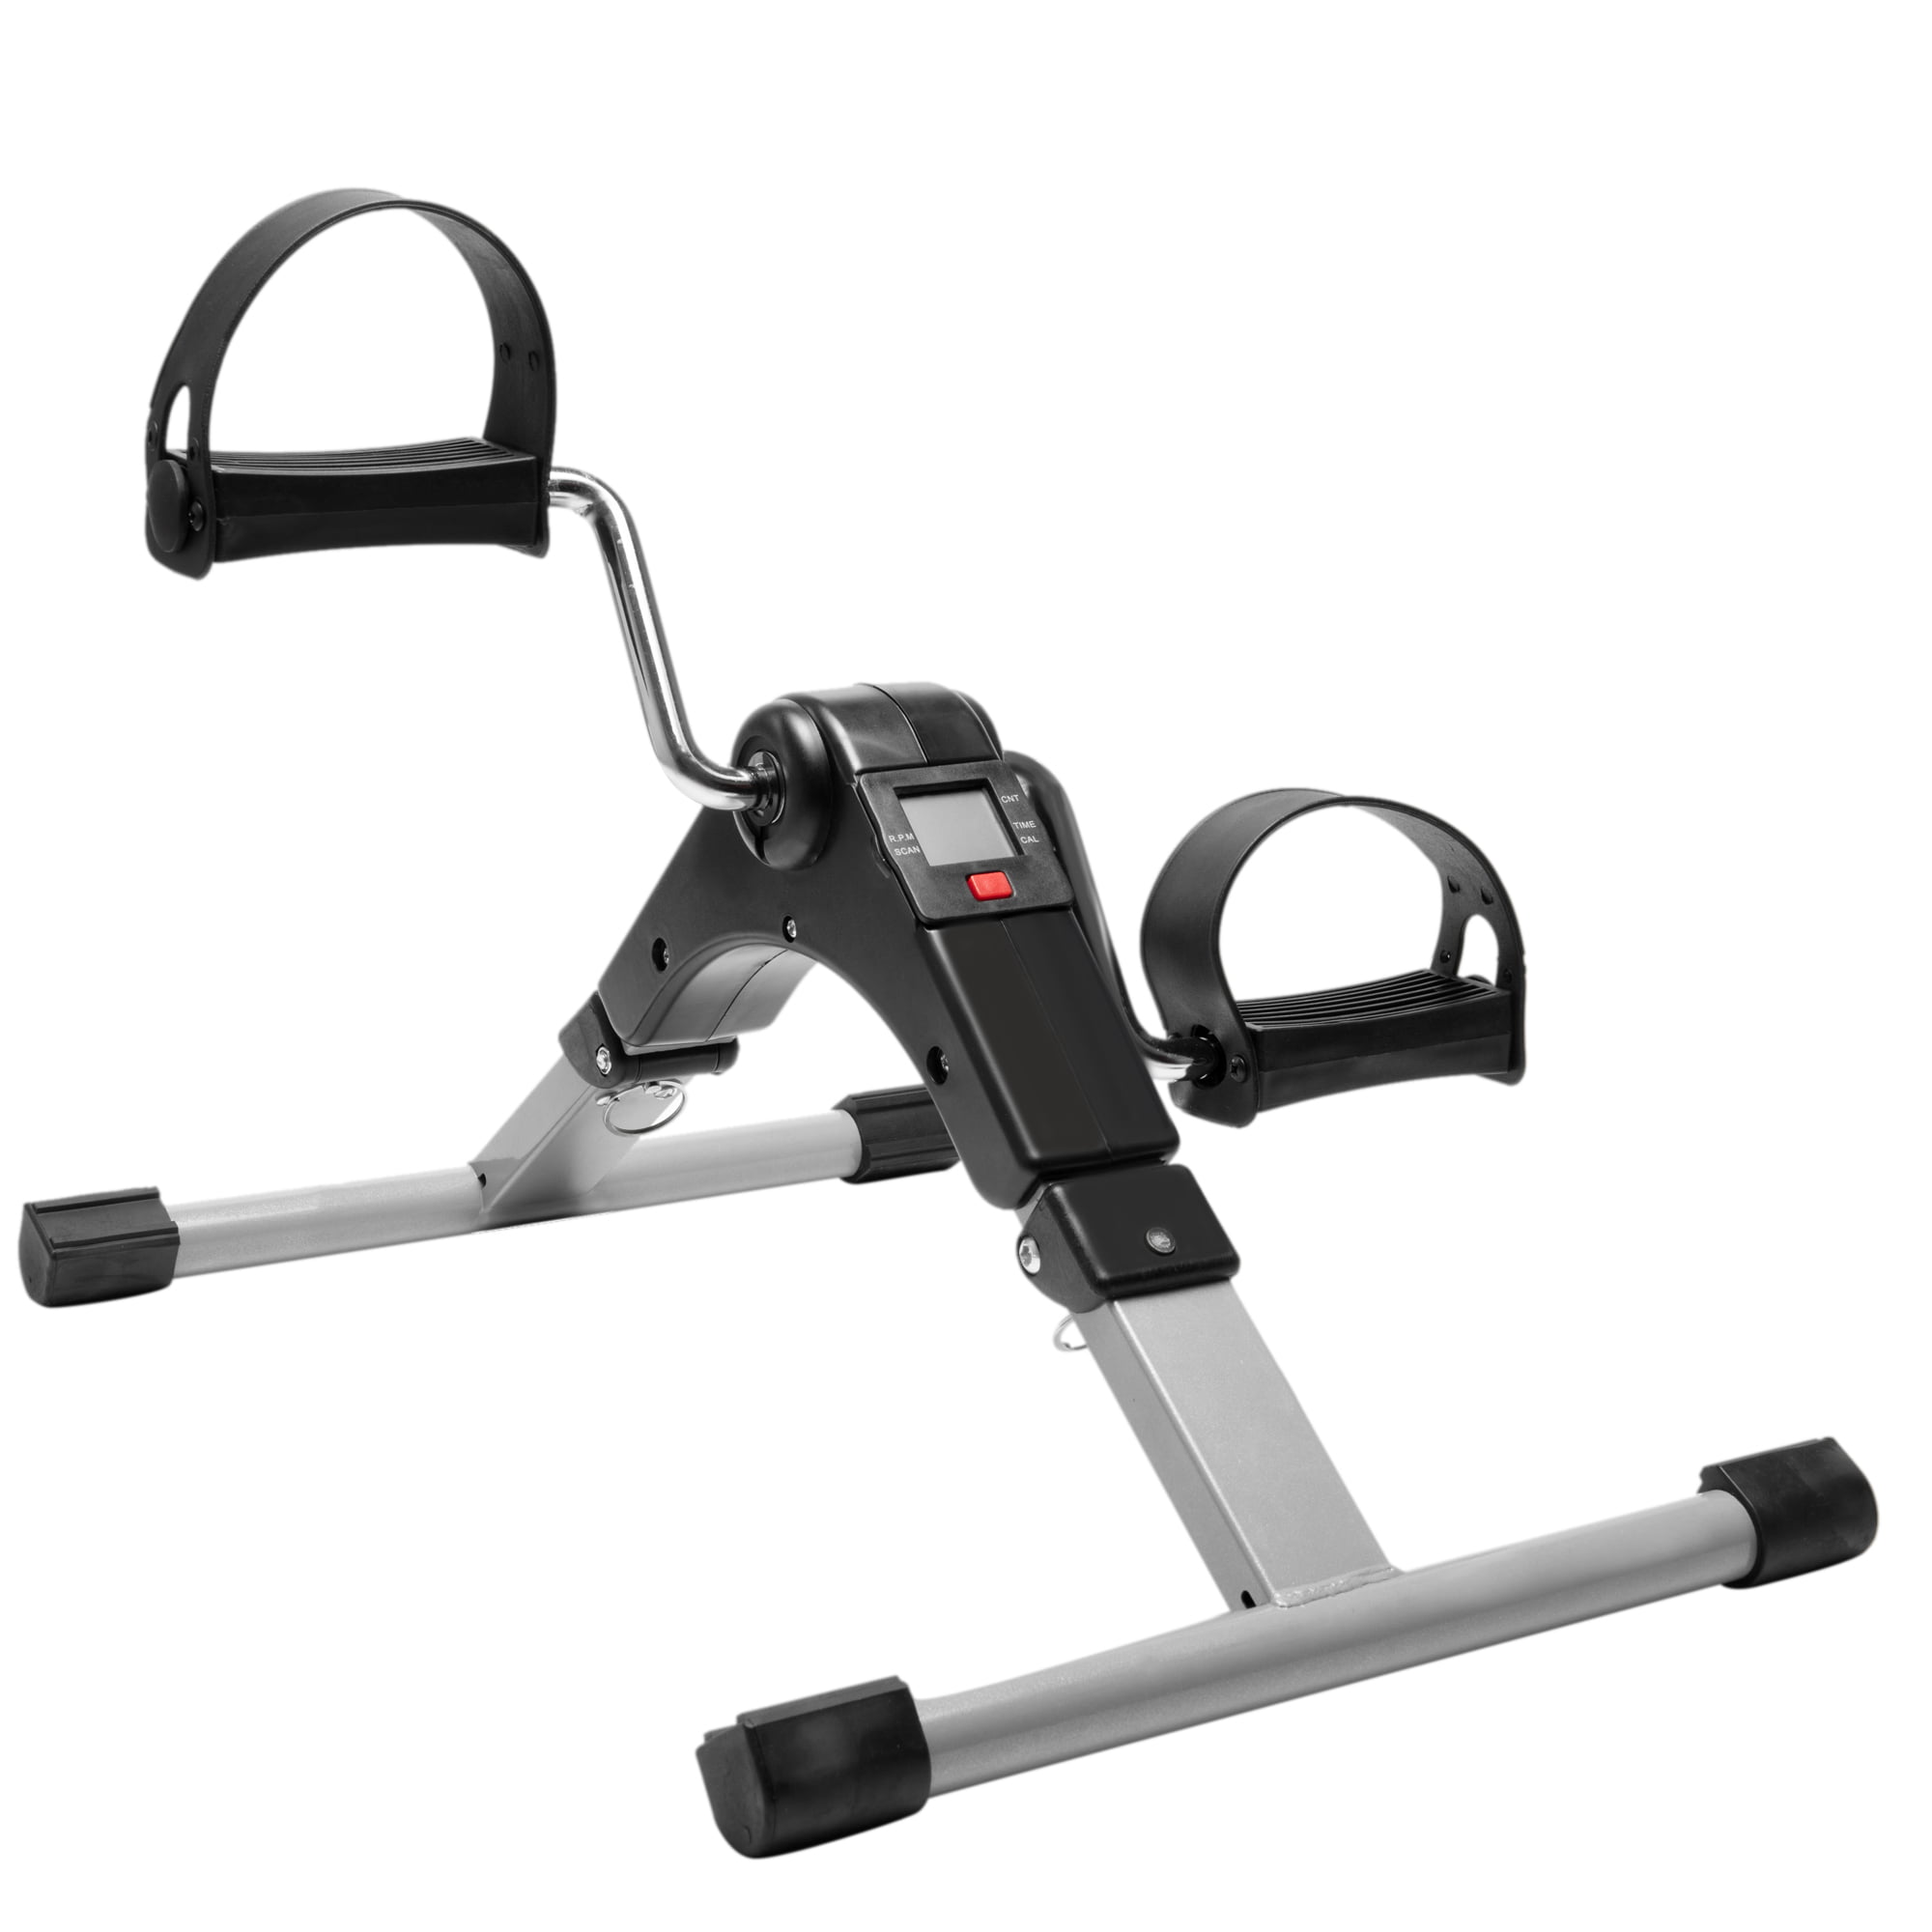 Pedal Exerciser Portable Folding Fitness Pedal Indoor Exercise Bike